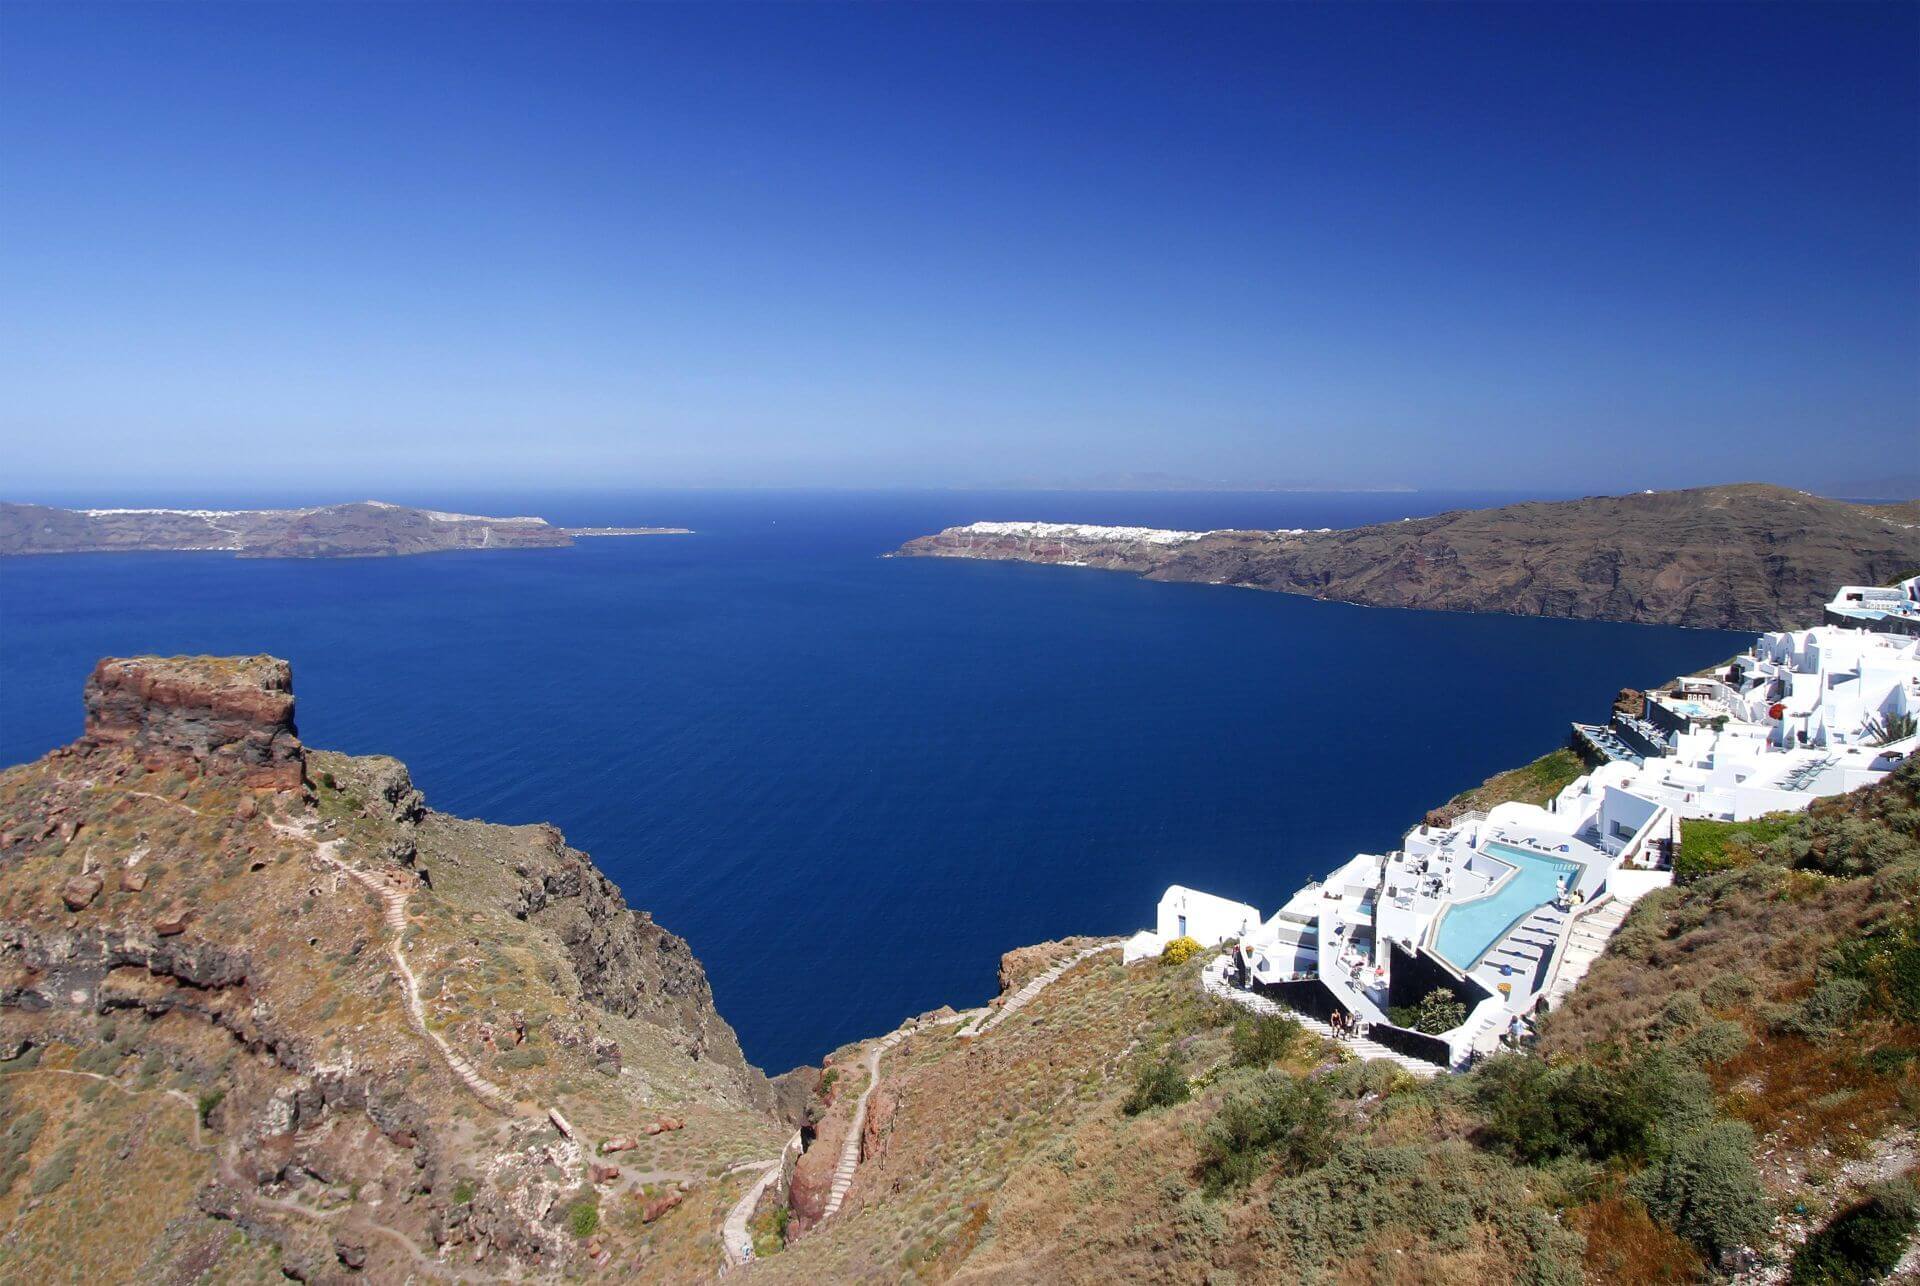 Grace hotel in Imerovigli and the amazing views over the caldera, Skaros Rock and Oia in Santorini